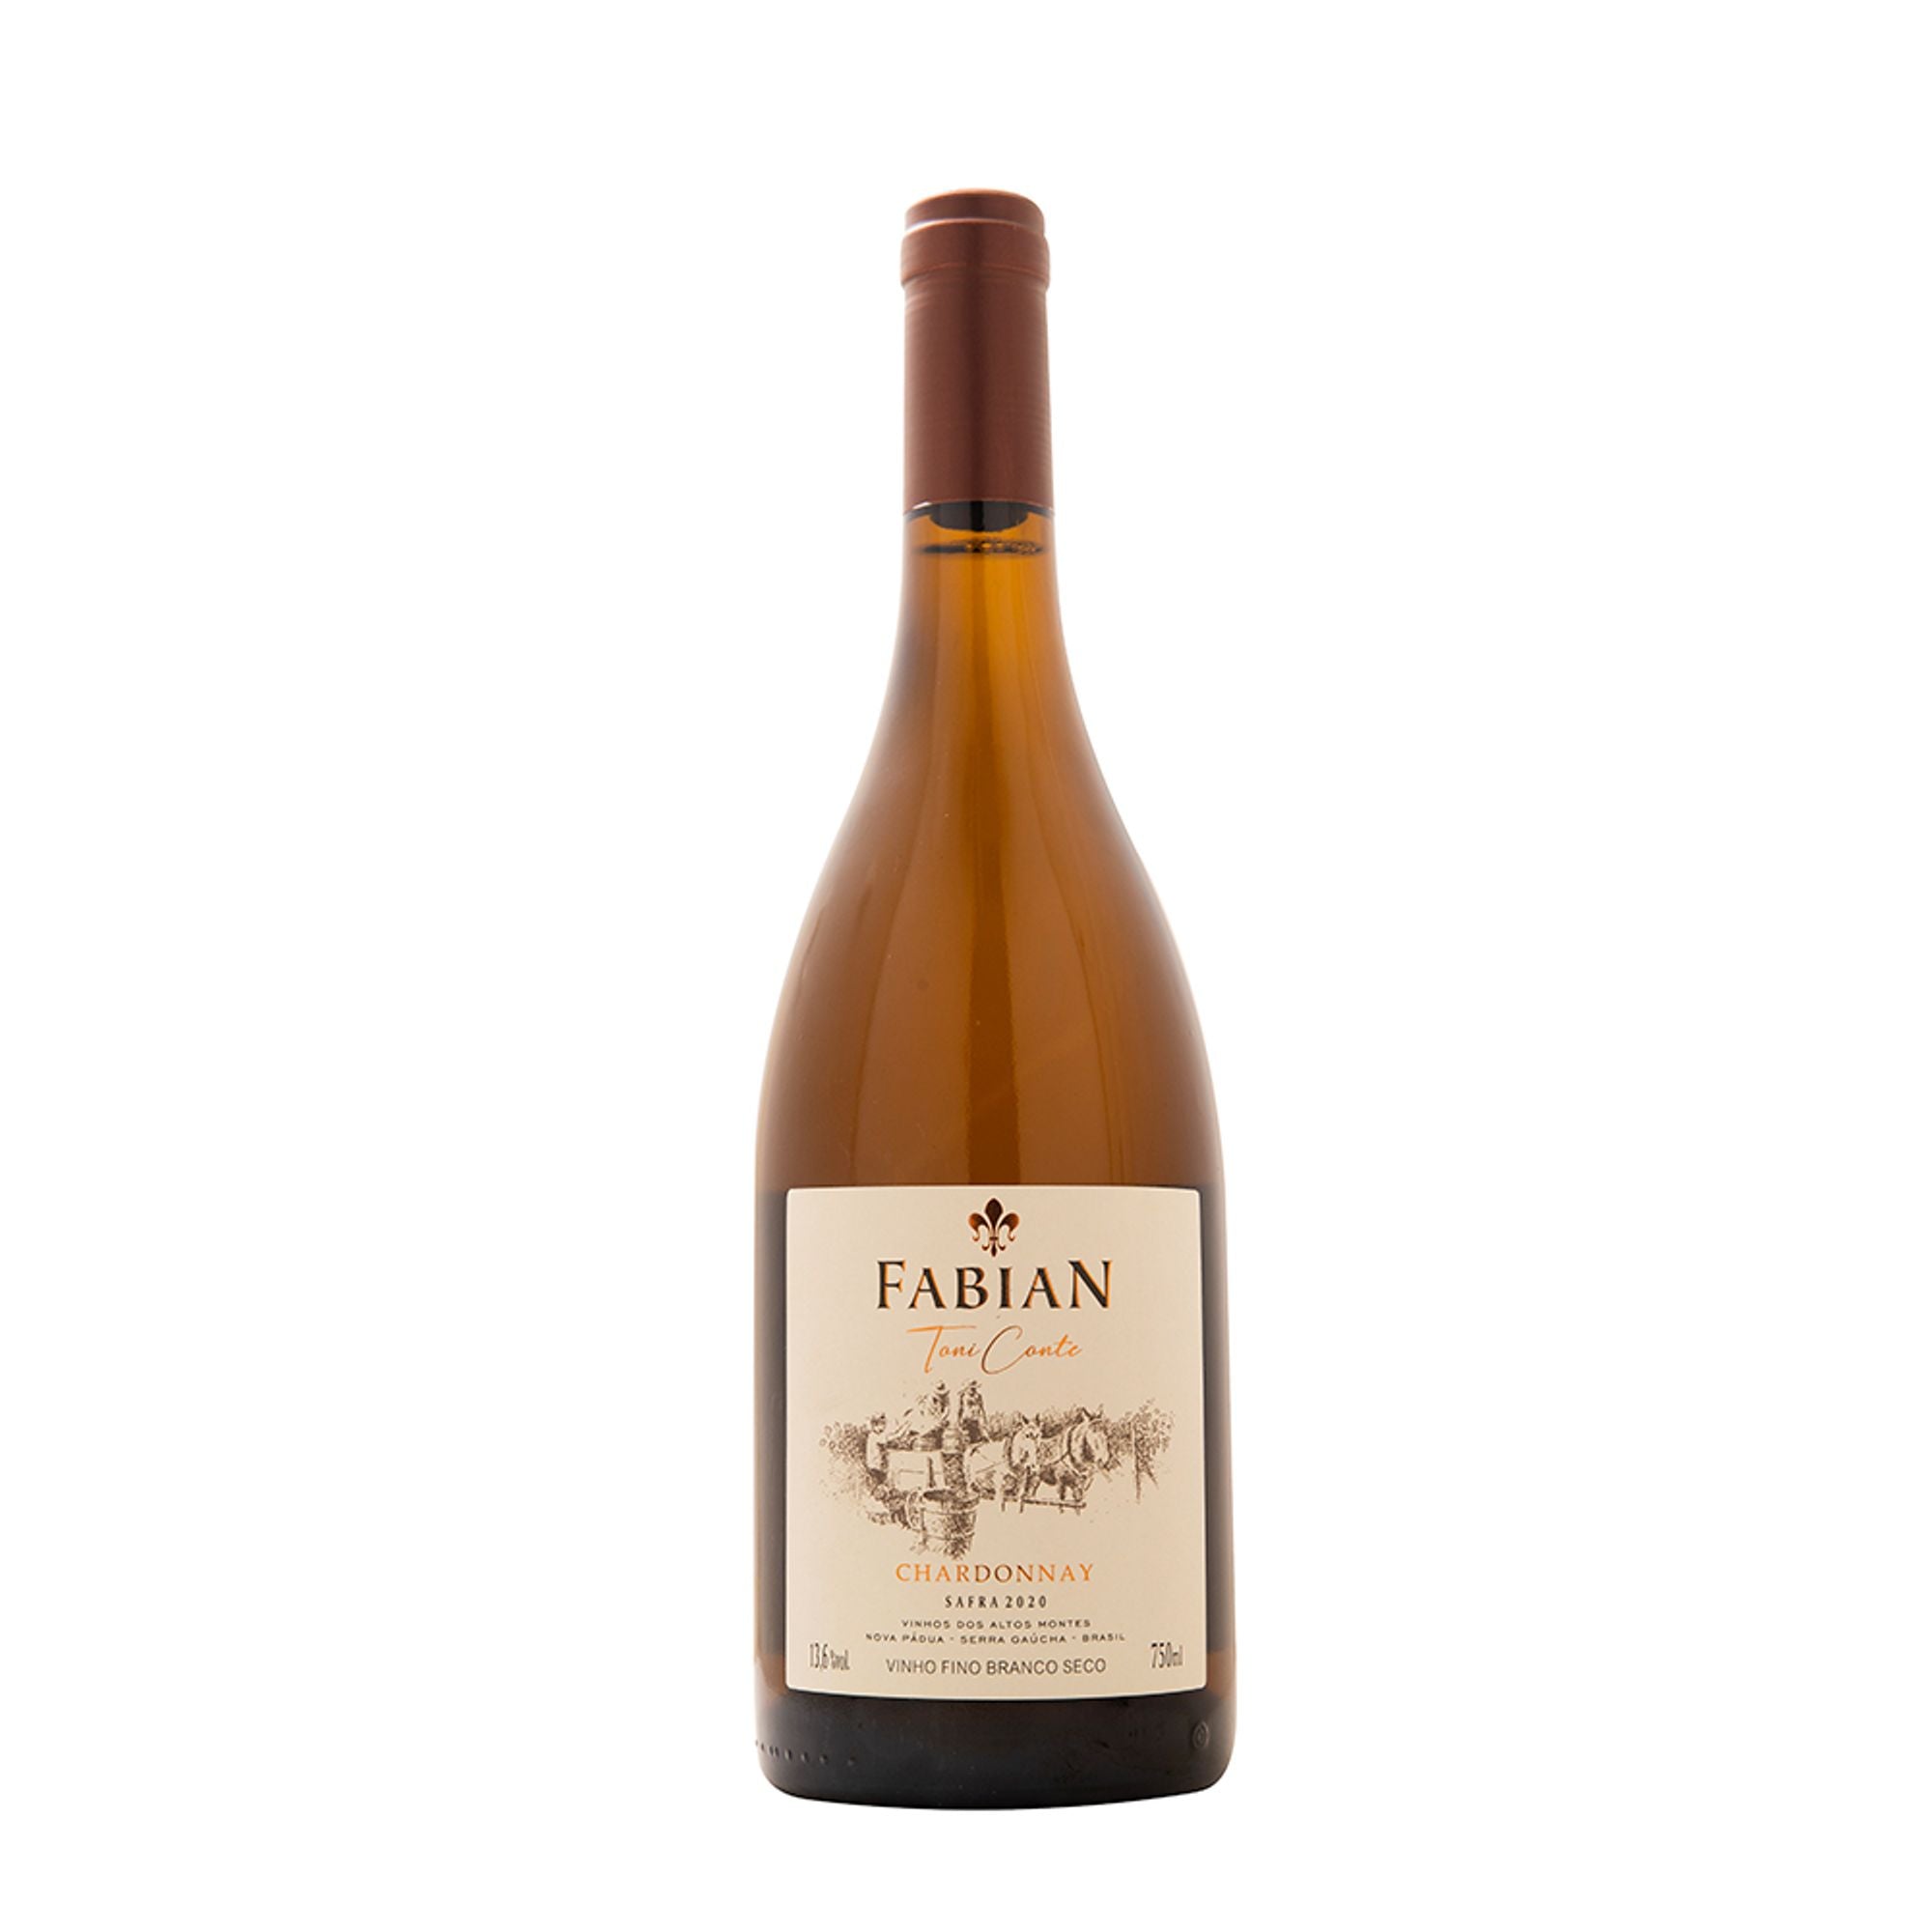 Fabian Toni Conte Chardonnay 2020